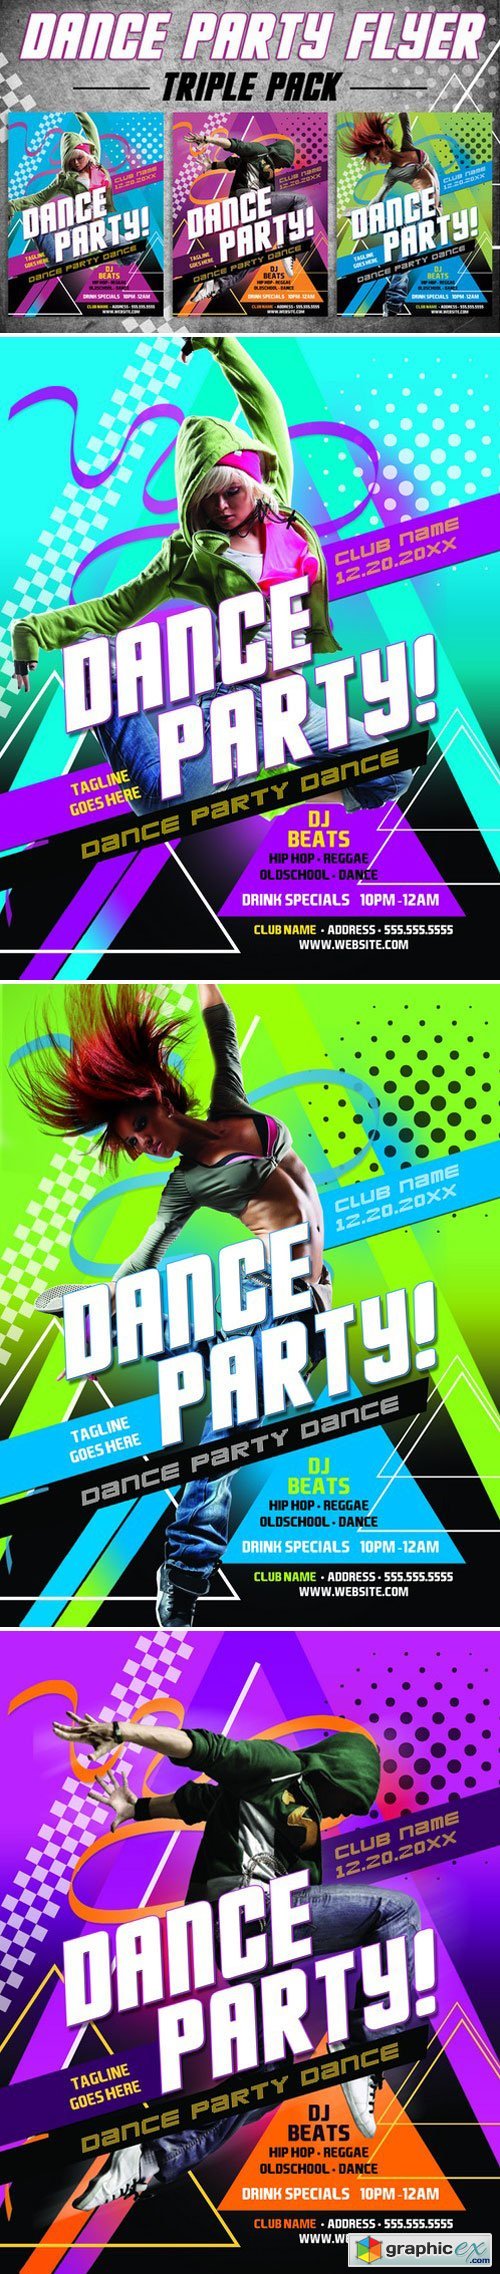 3 Dance Party Flyer